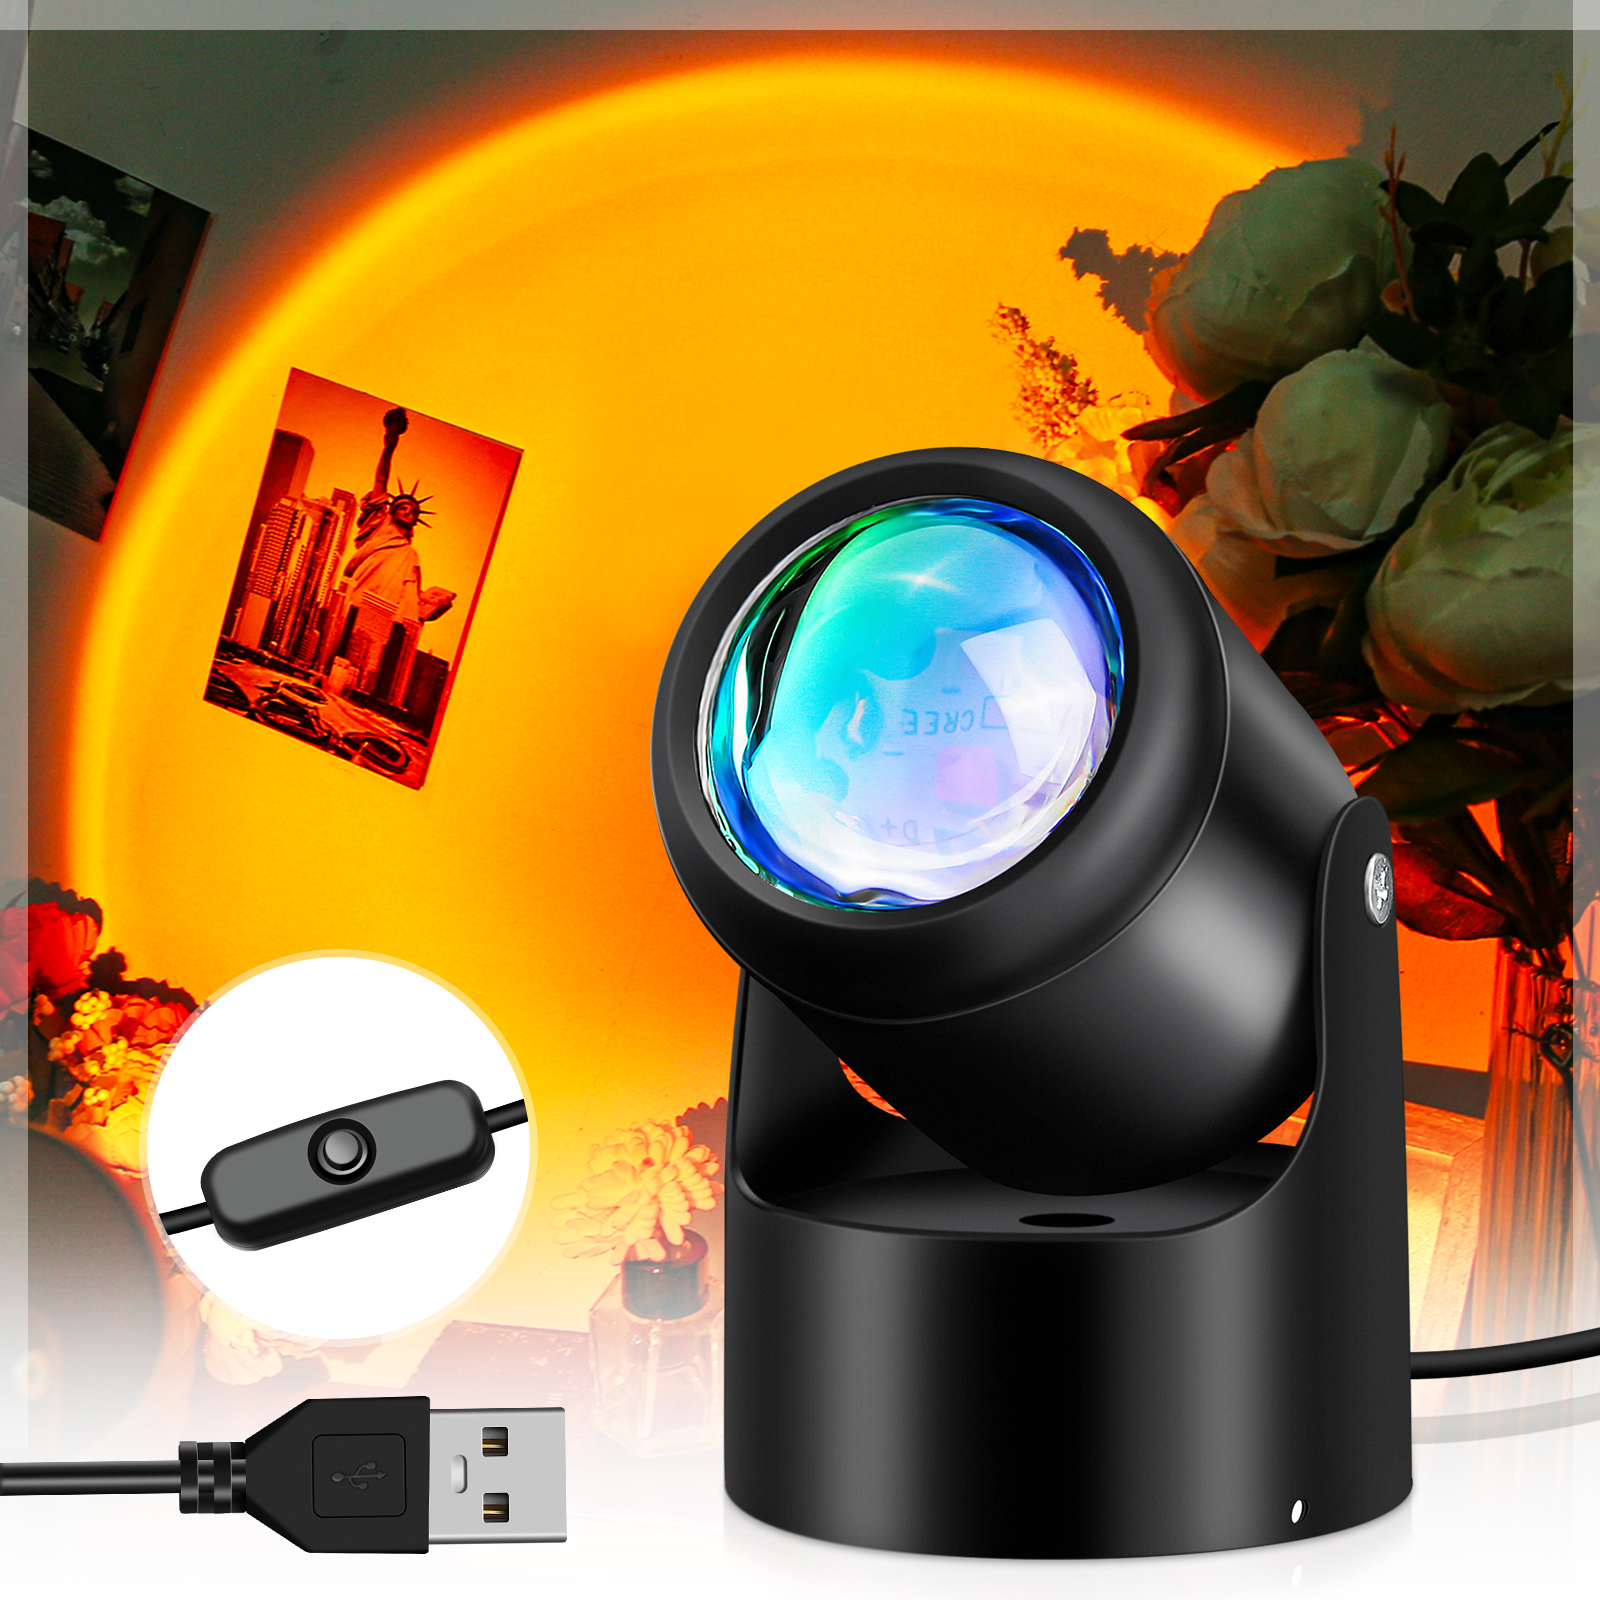 CHARMINER-180deg-Rotation-Sunset-Projection-LED-Light-Sunset-Decor-Photographic-USB-Night-Light-for--1298044-1